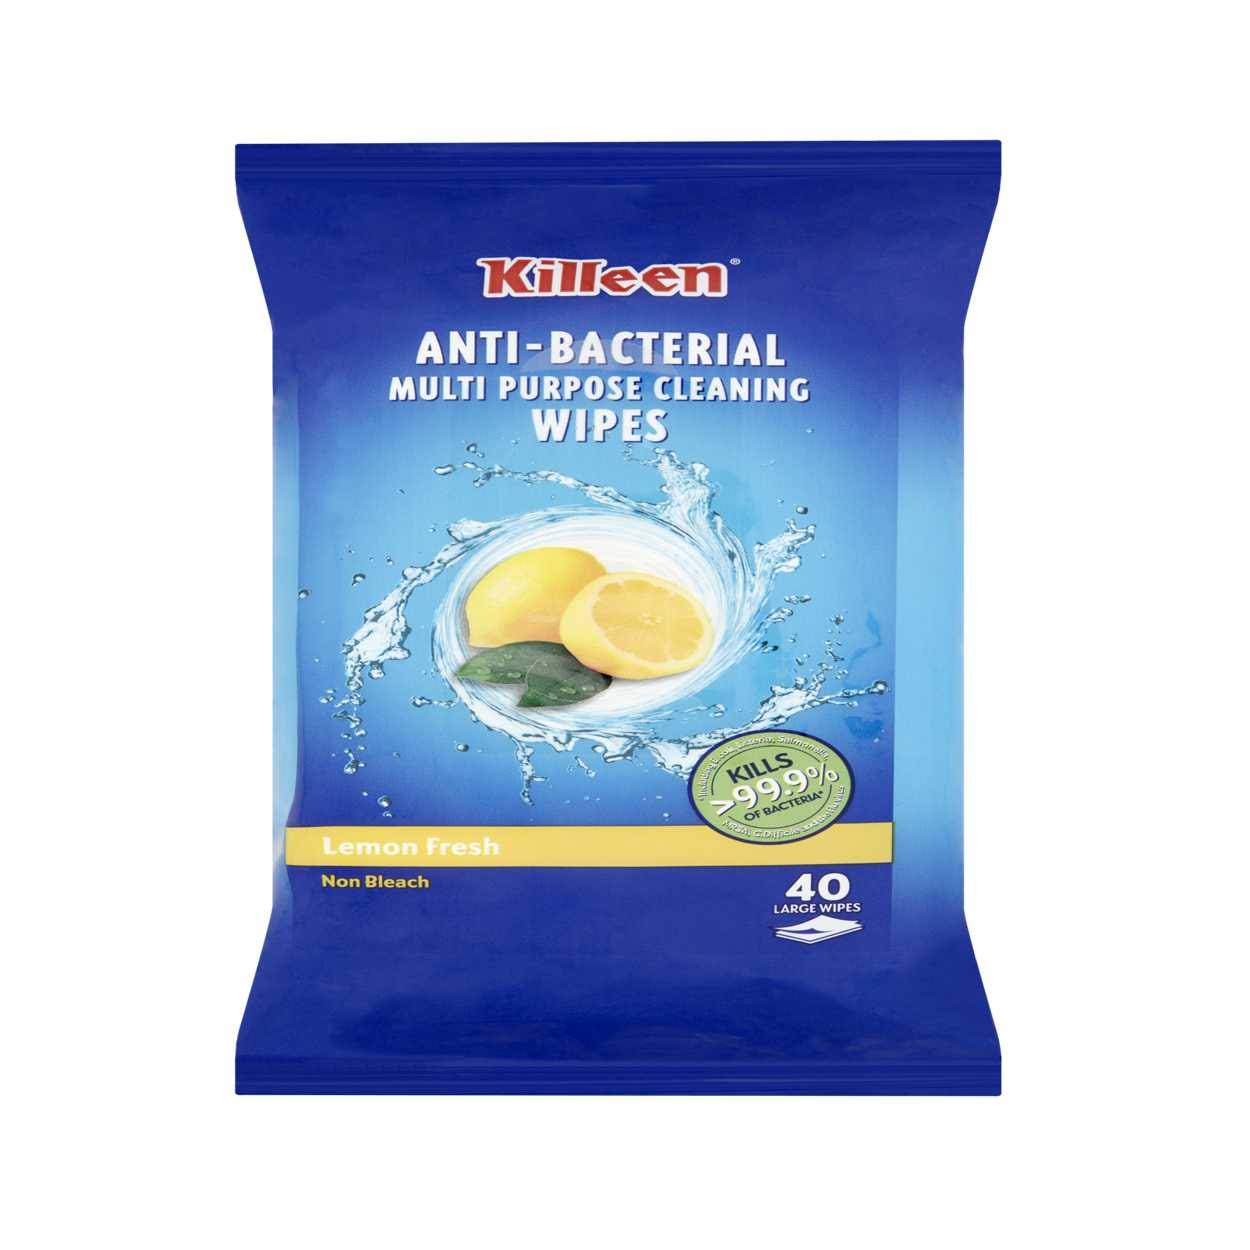 Killeen Anti-Bacterial Multi Purpose Cleaning Wipes - Lemon Fresh, 40 Large Wipes